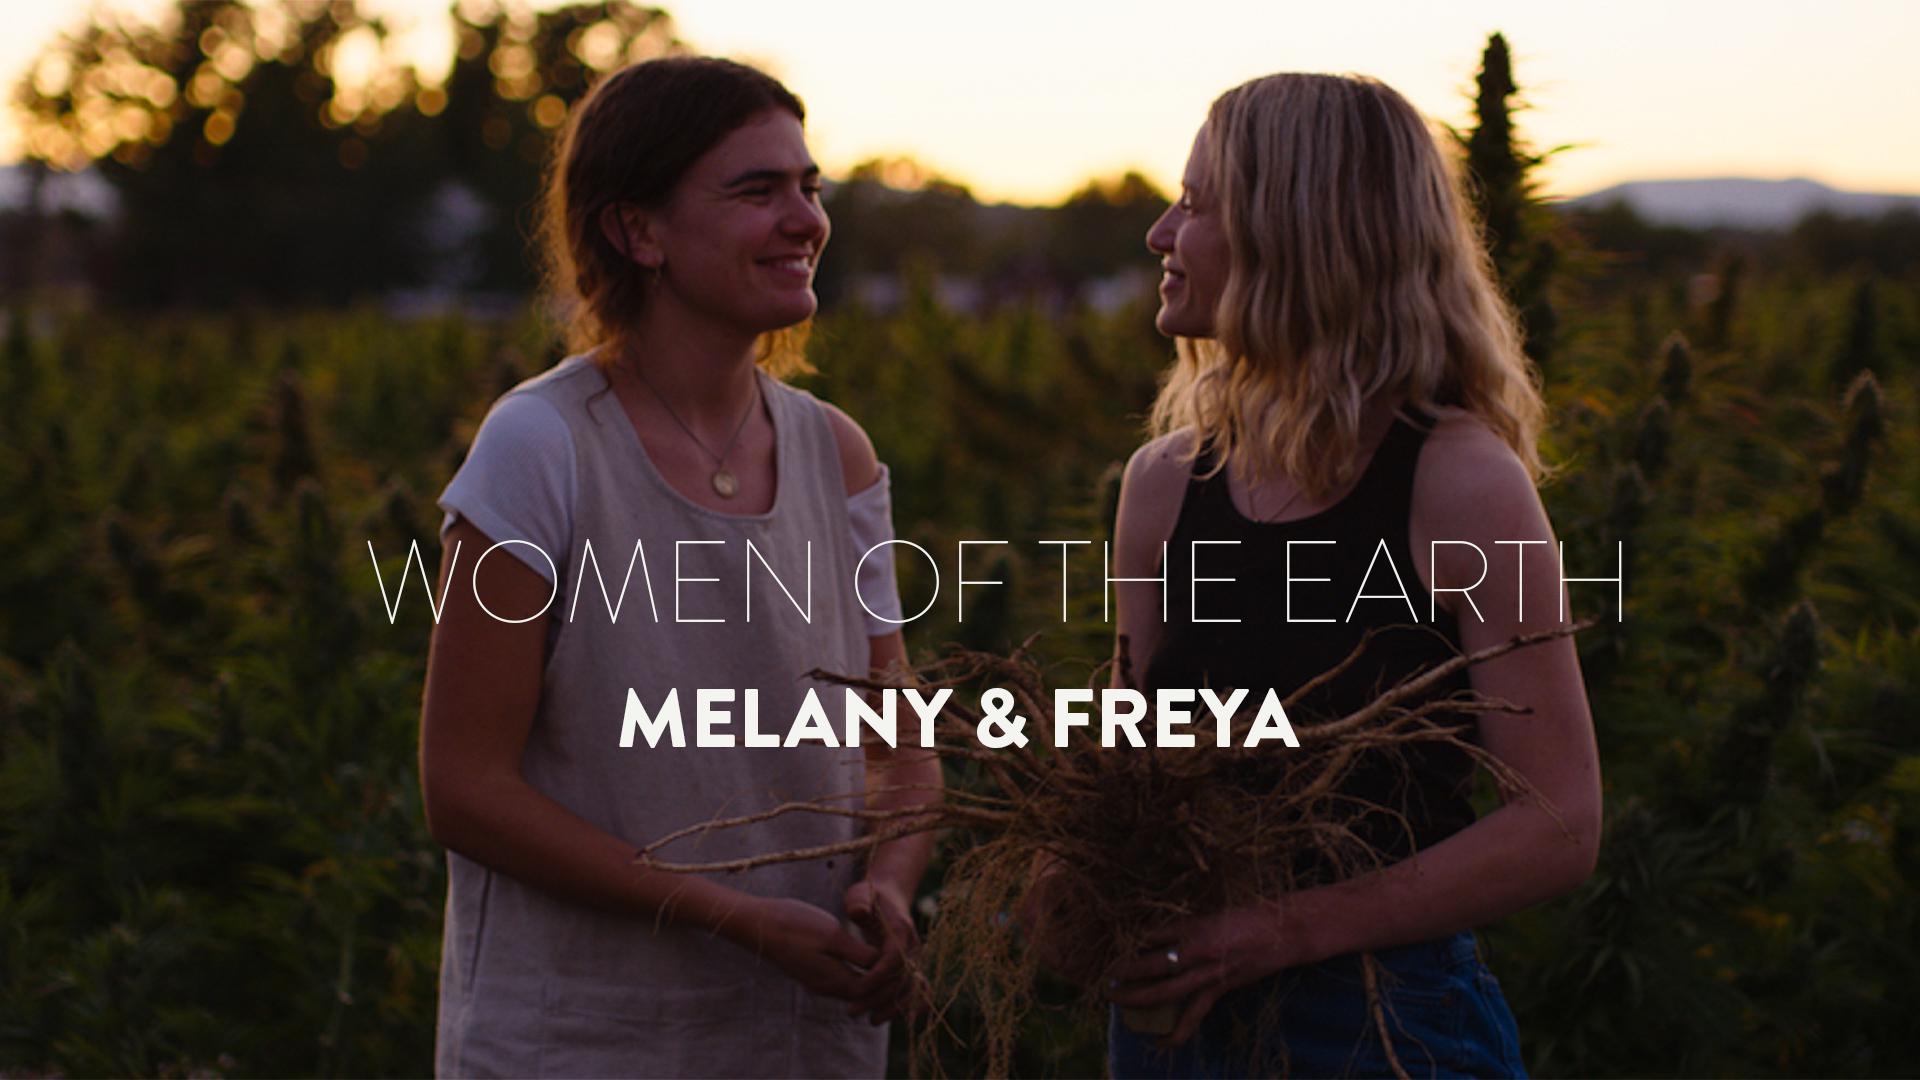 Women of the Earth, Melany & Freya